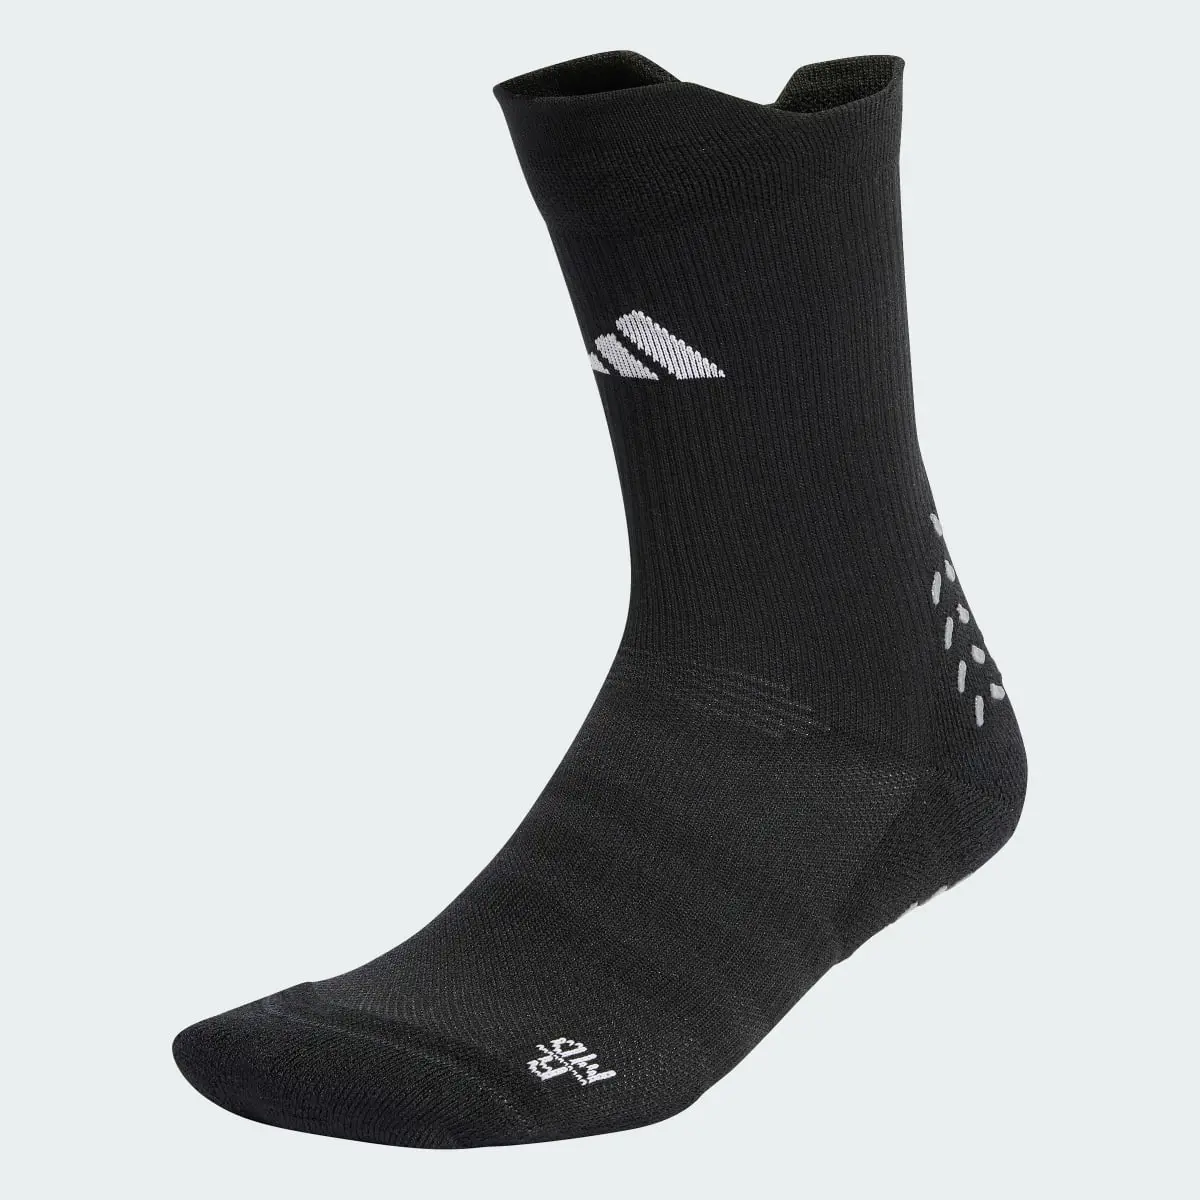 Adidas Football GRIP Printed Cushioned Crew Performance Socks. 1